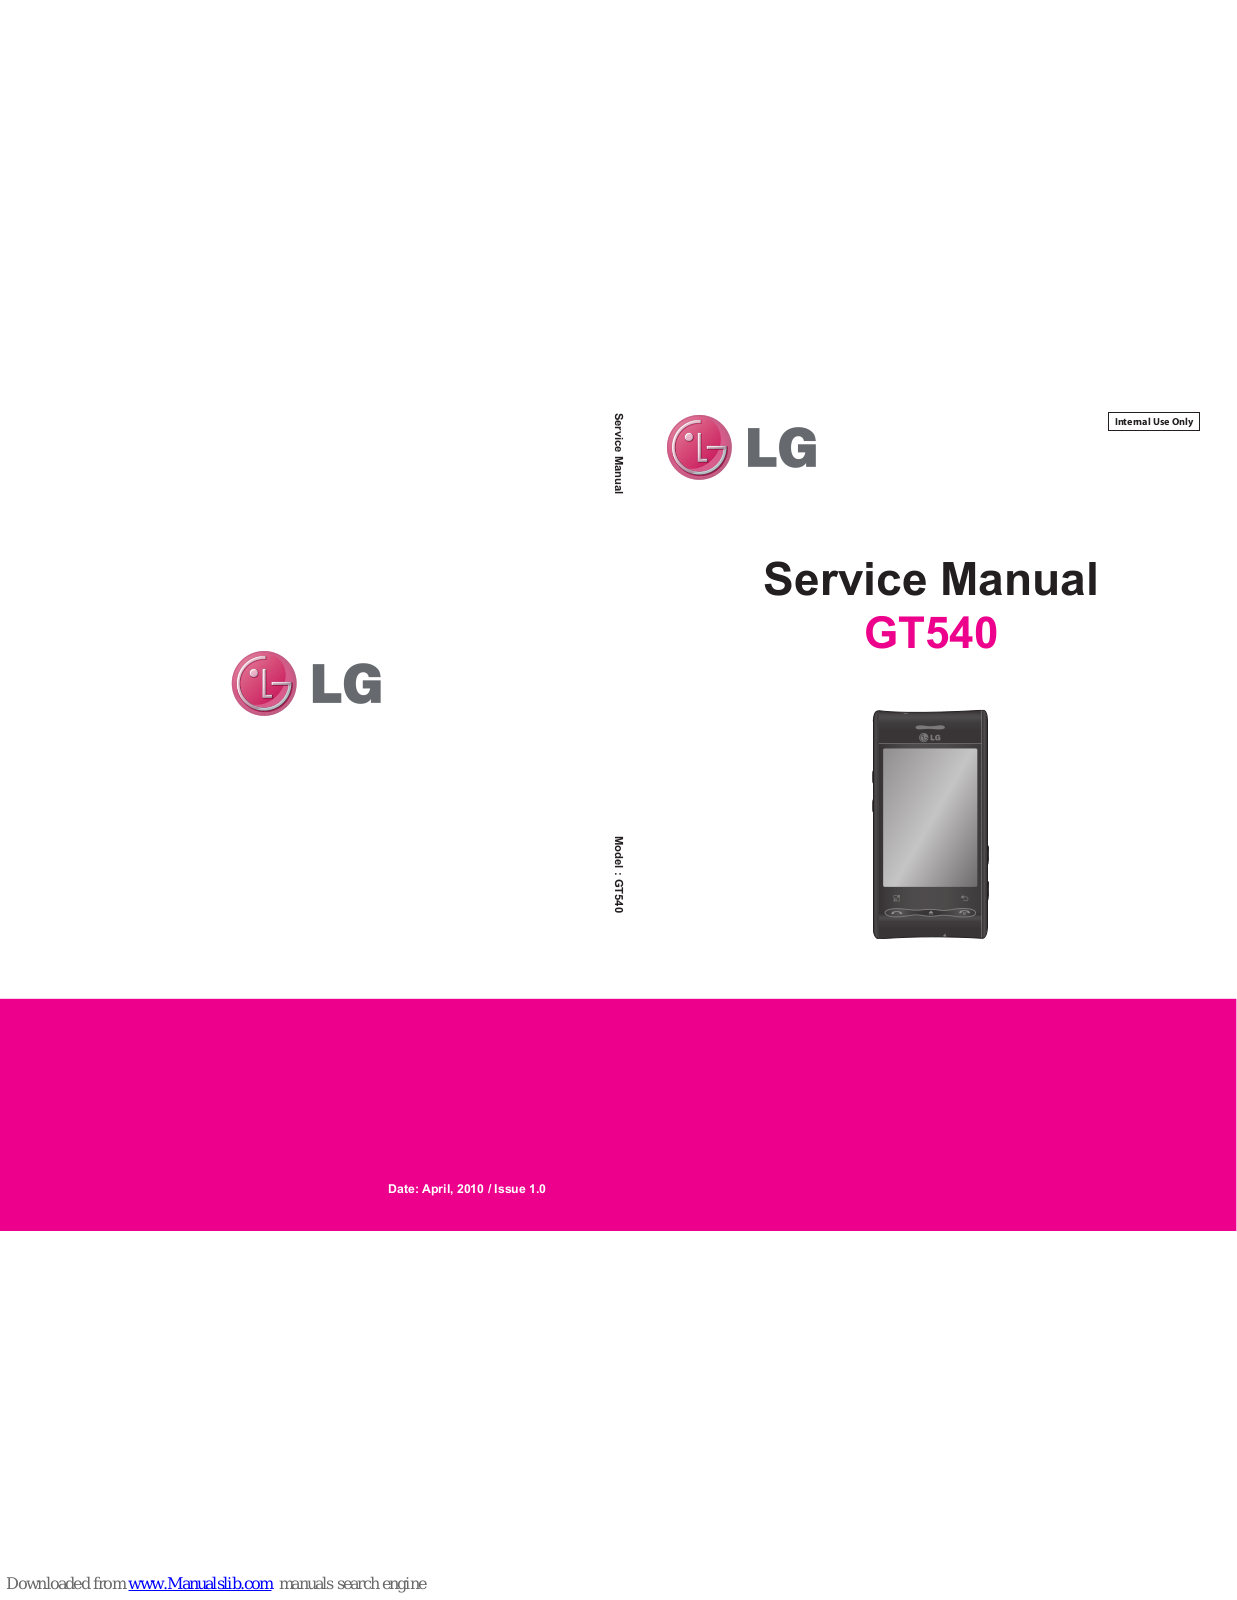 LG GT540 Service Manual